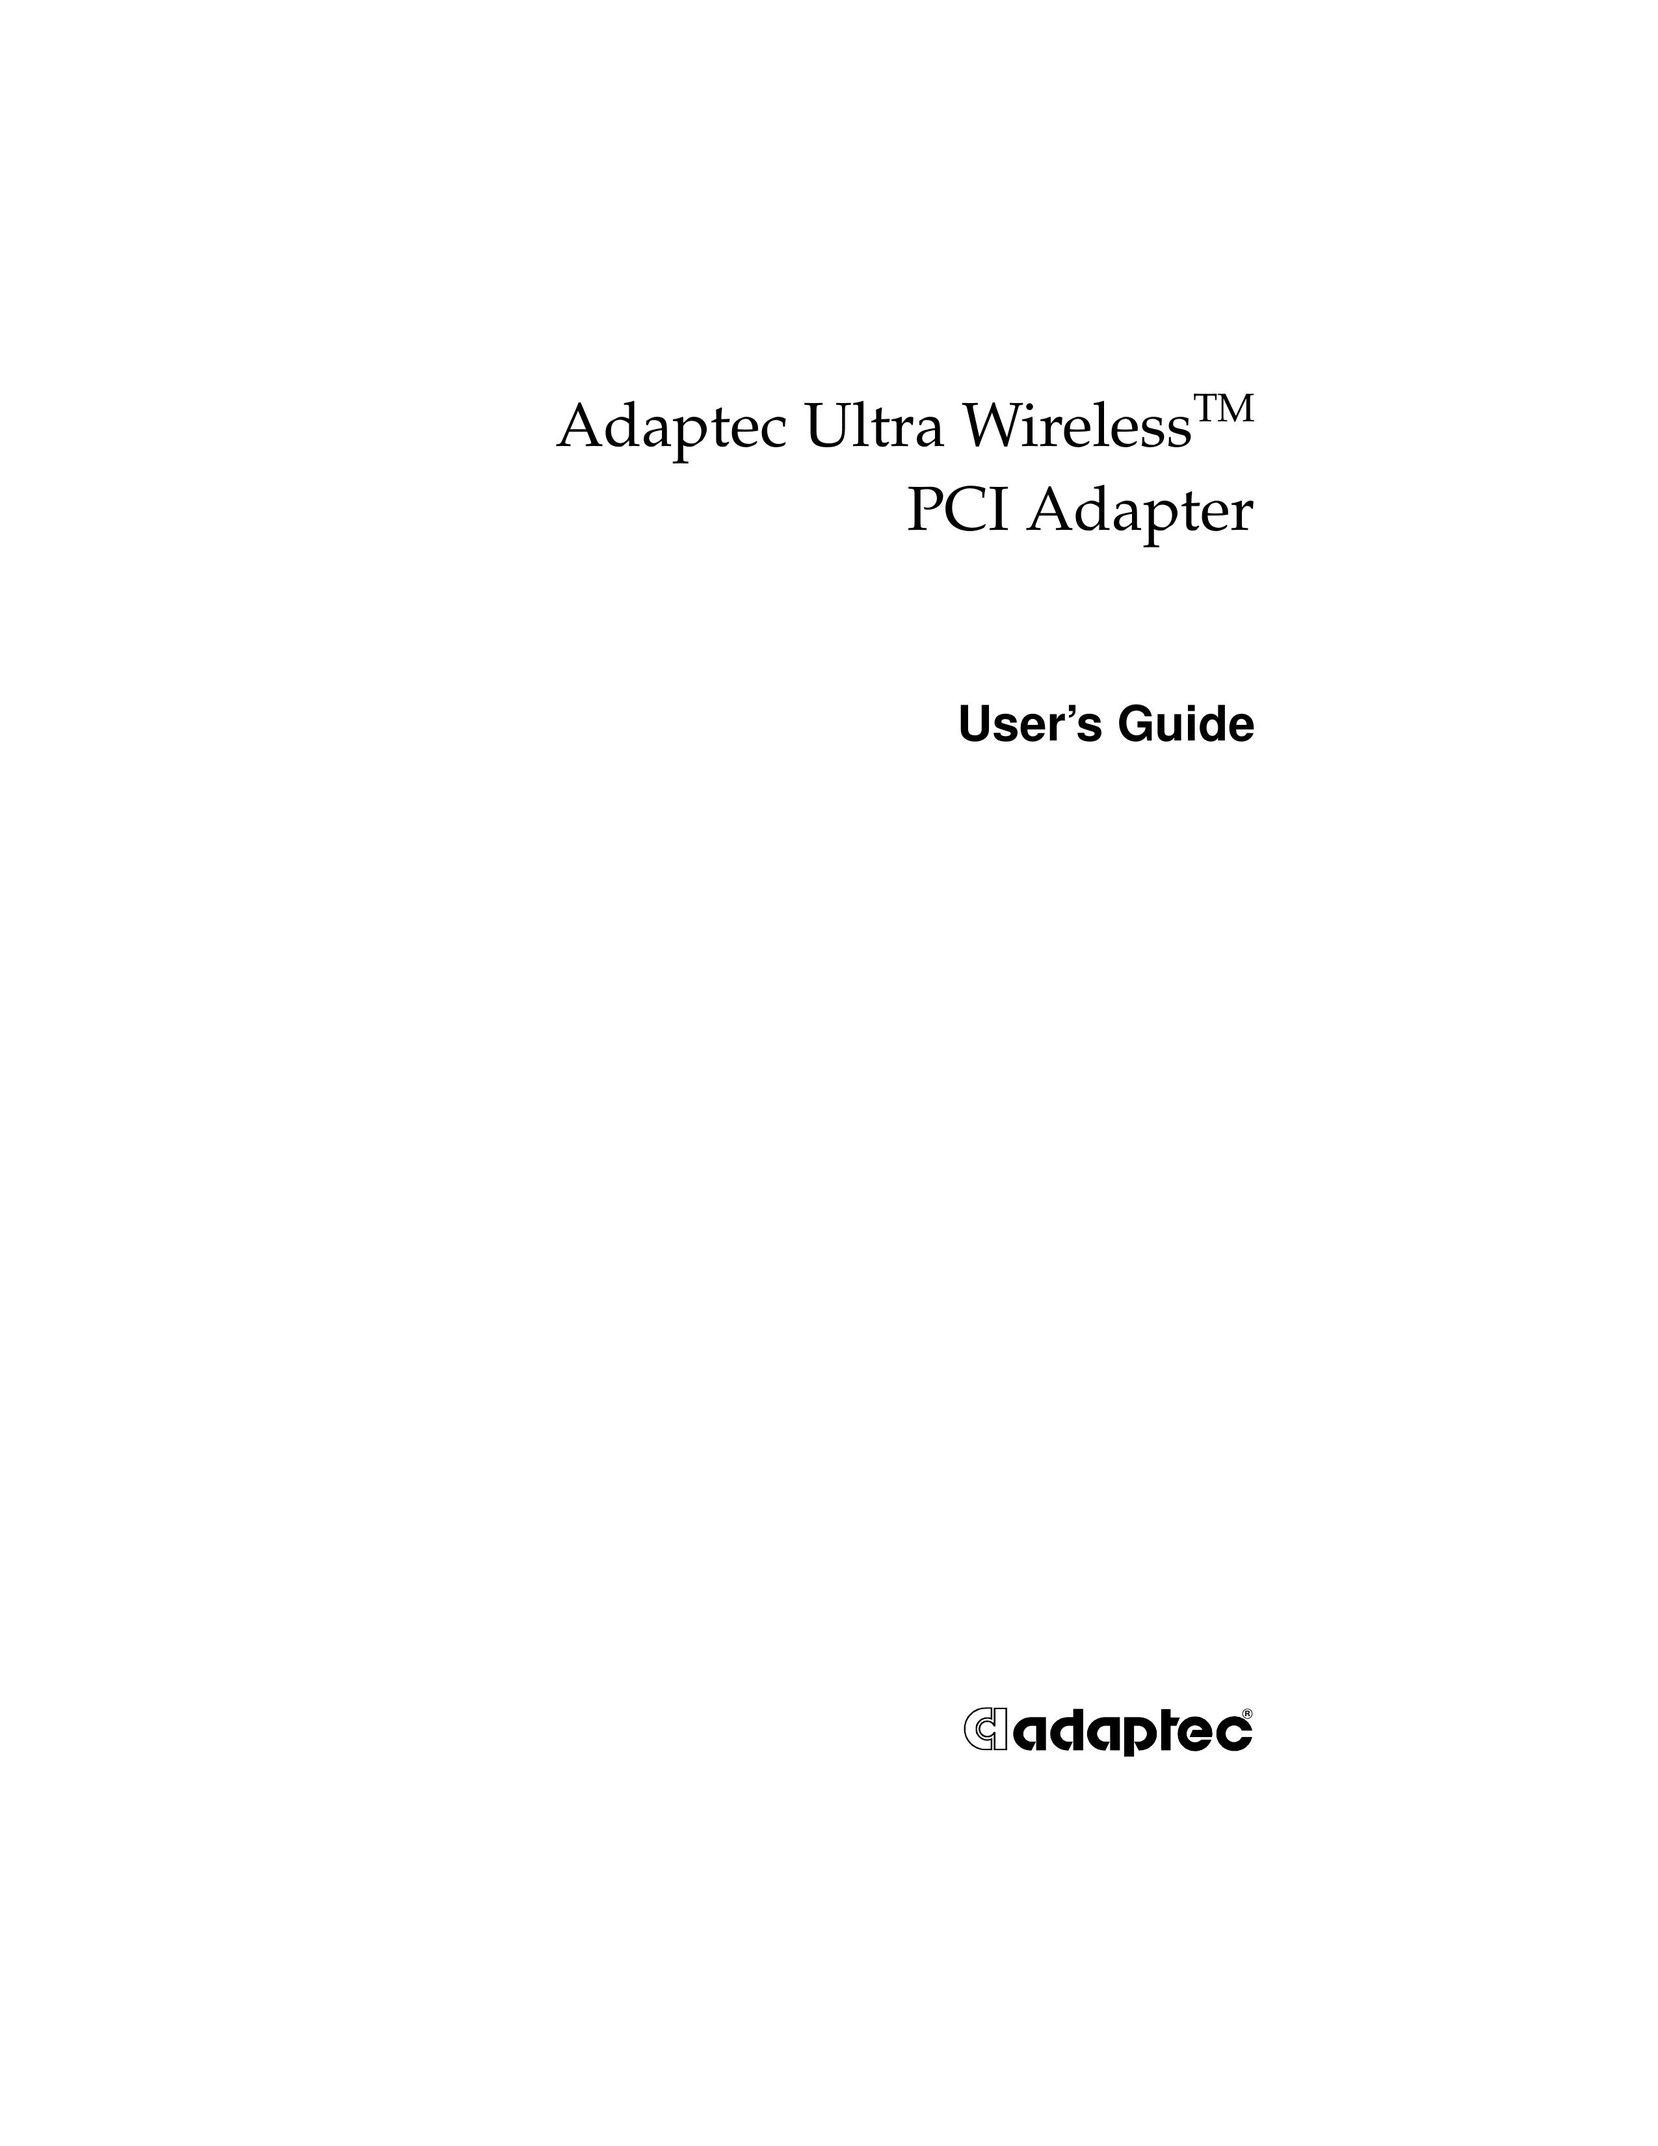 Adaptec WirelessTM Network Card User Manual